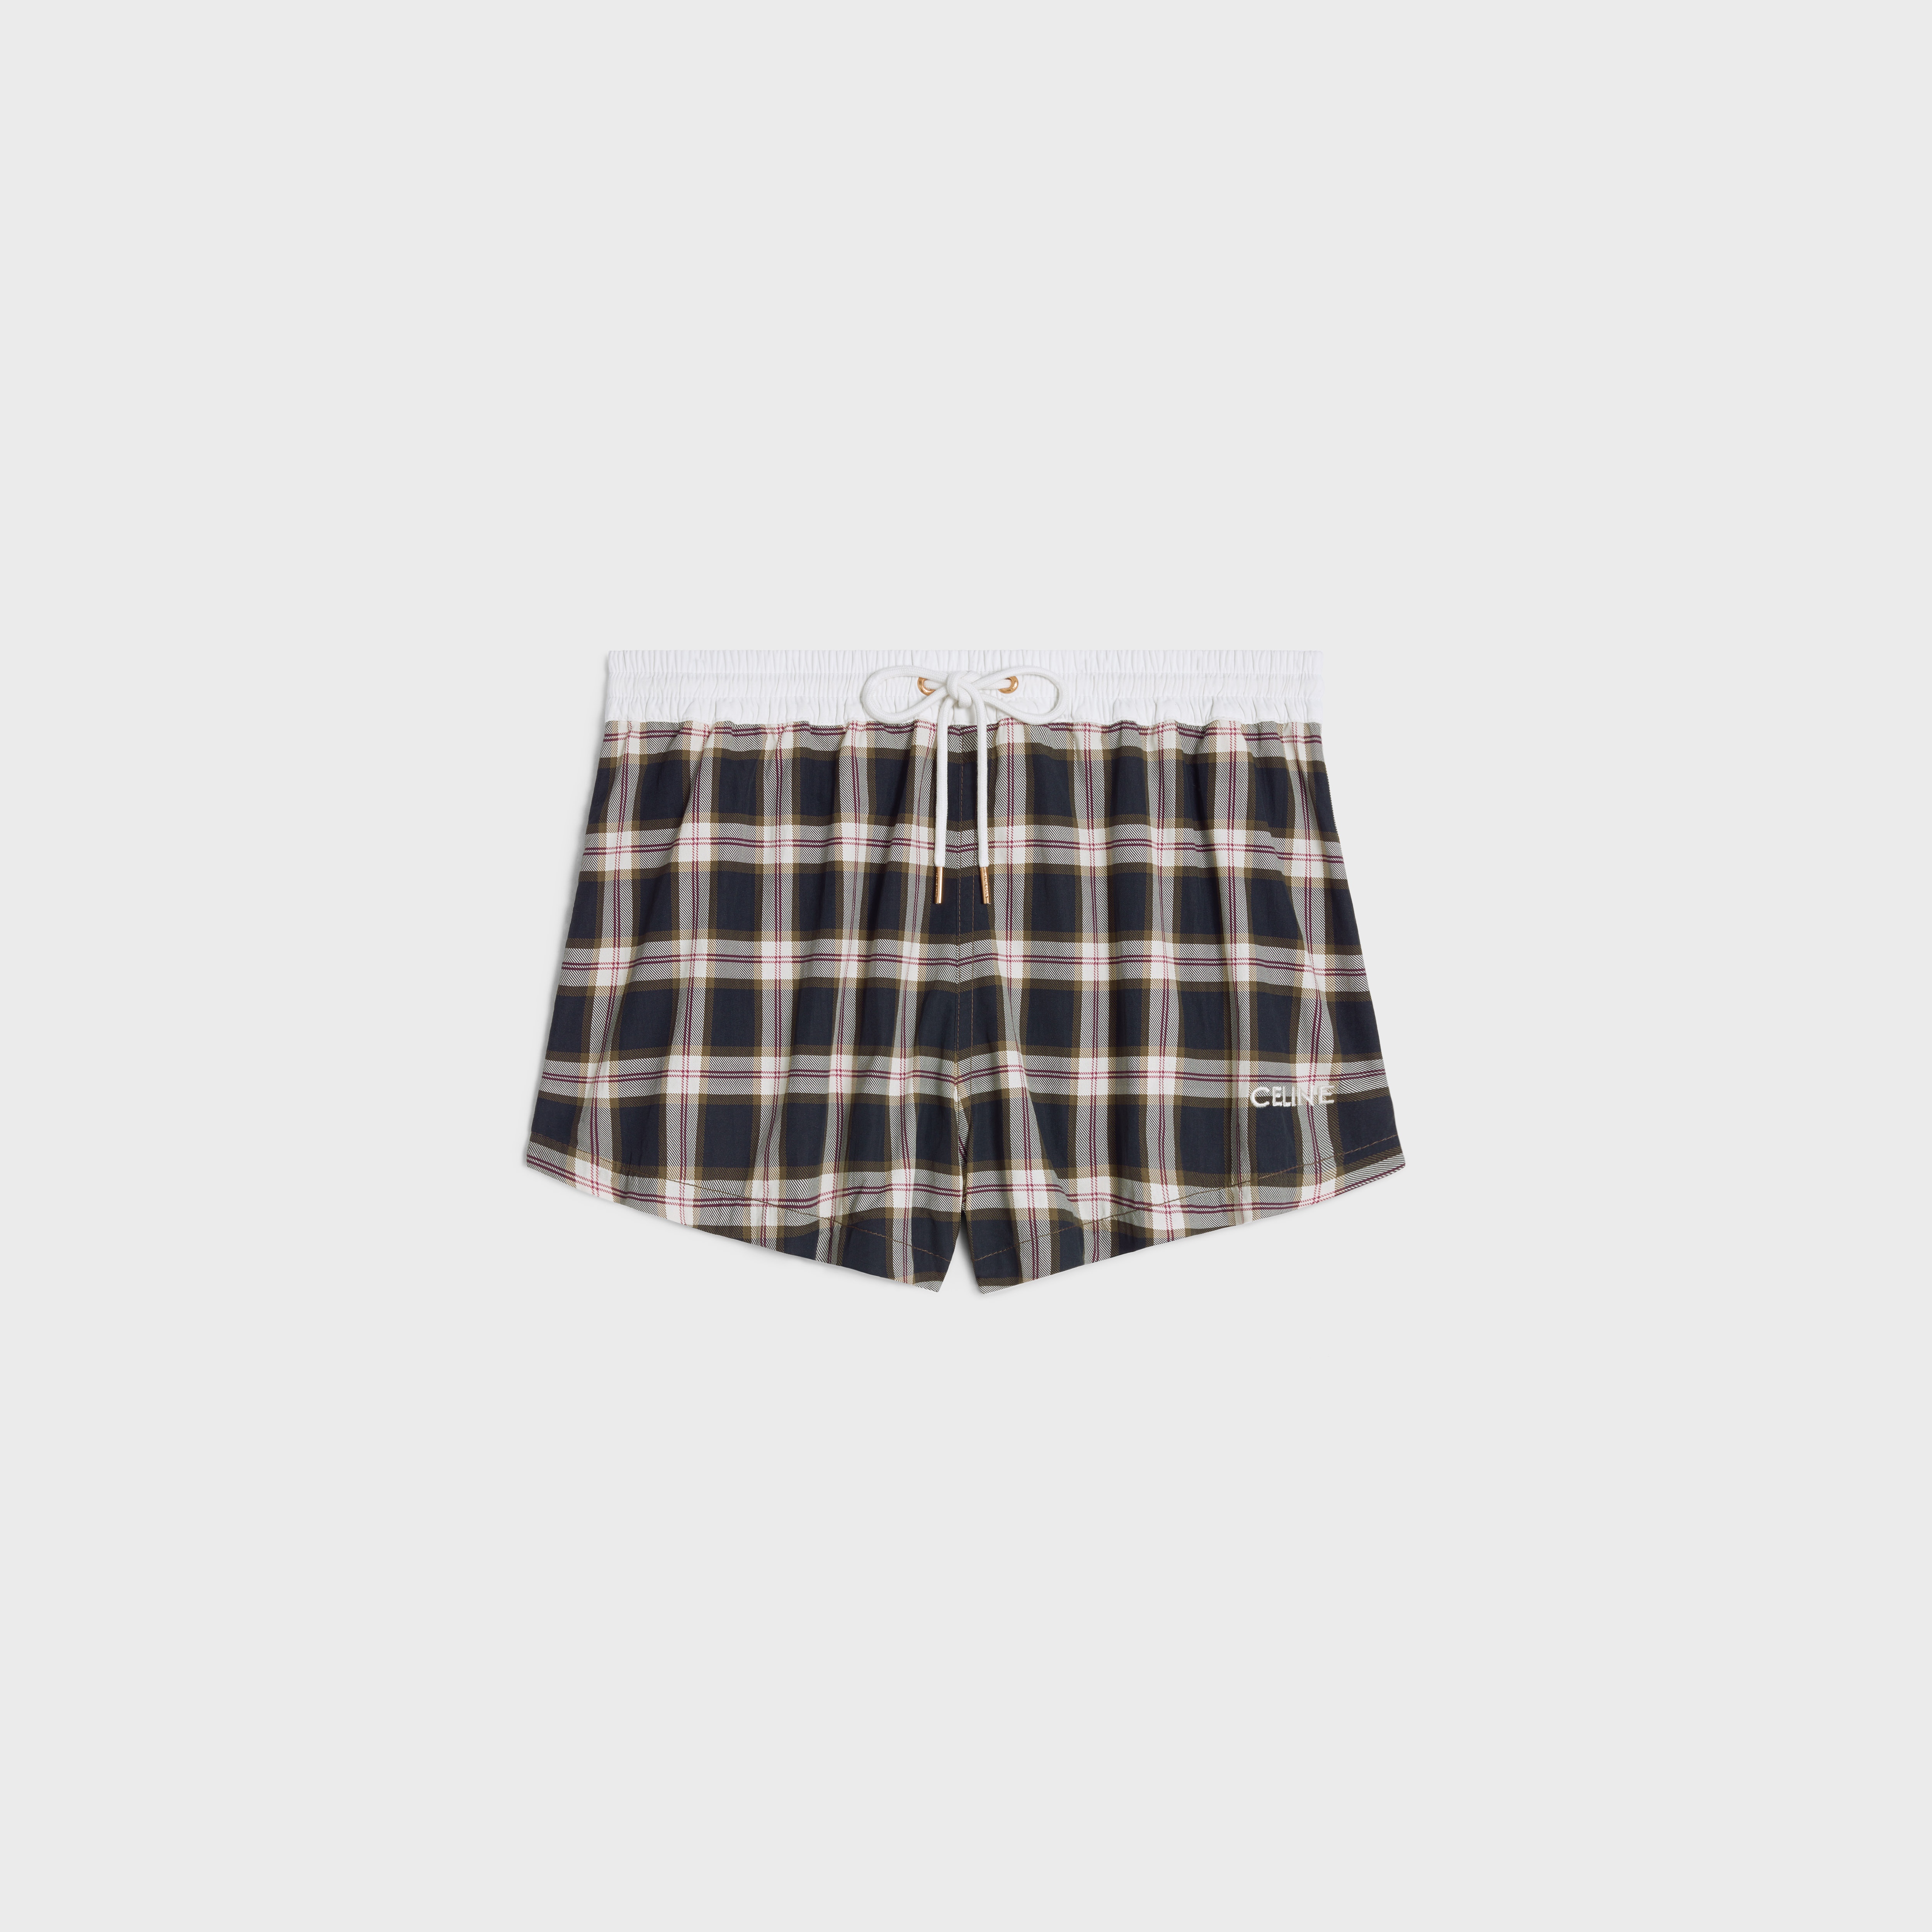 celine mini shorts in checked panama - 1